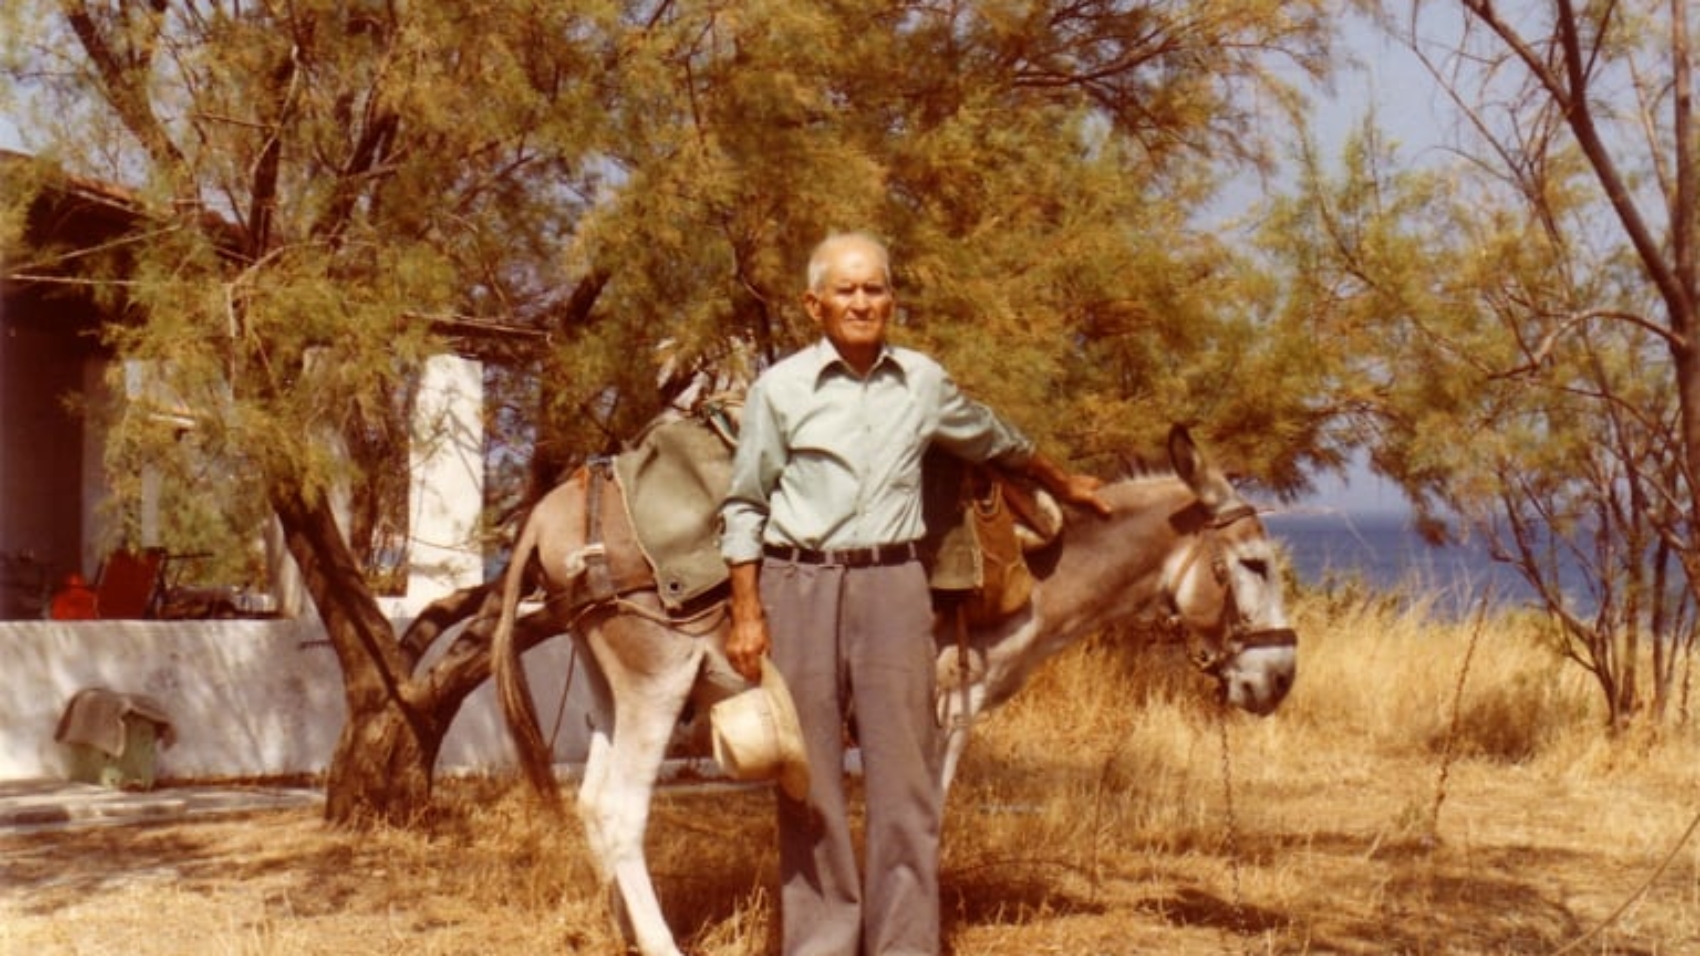 Antanasio with Donkey at Spiti